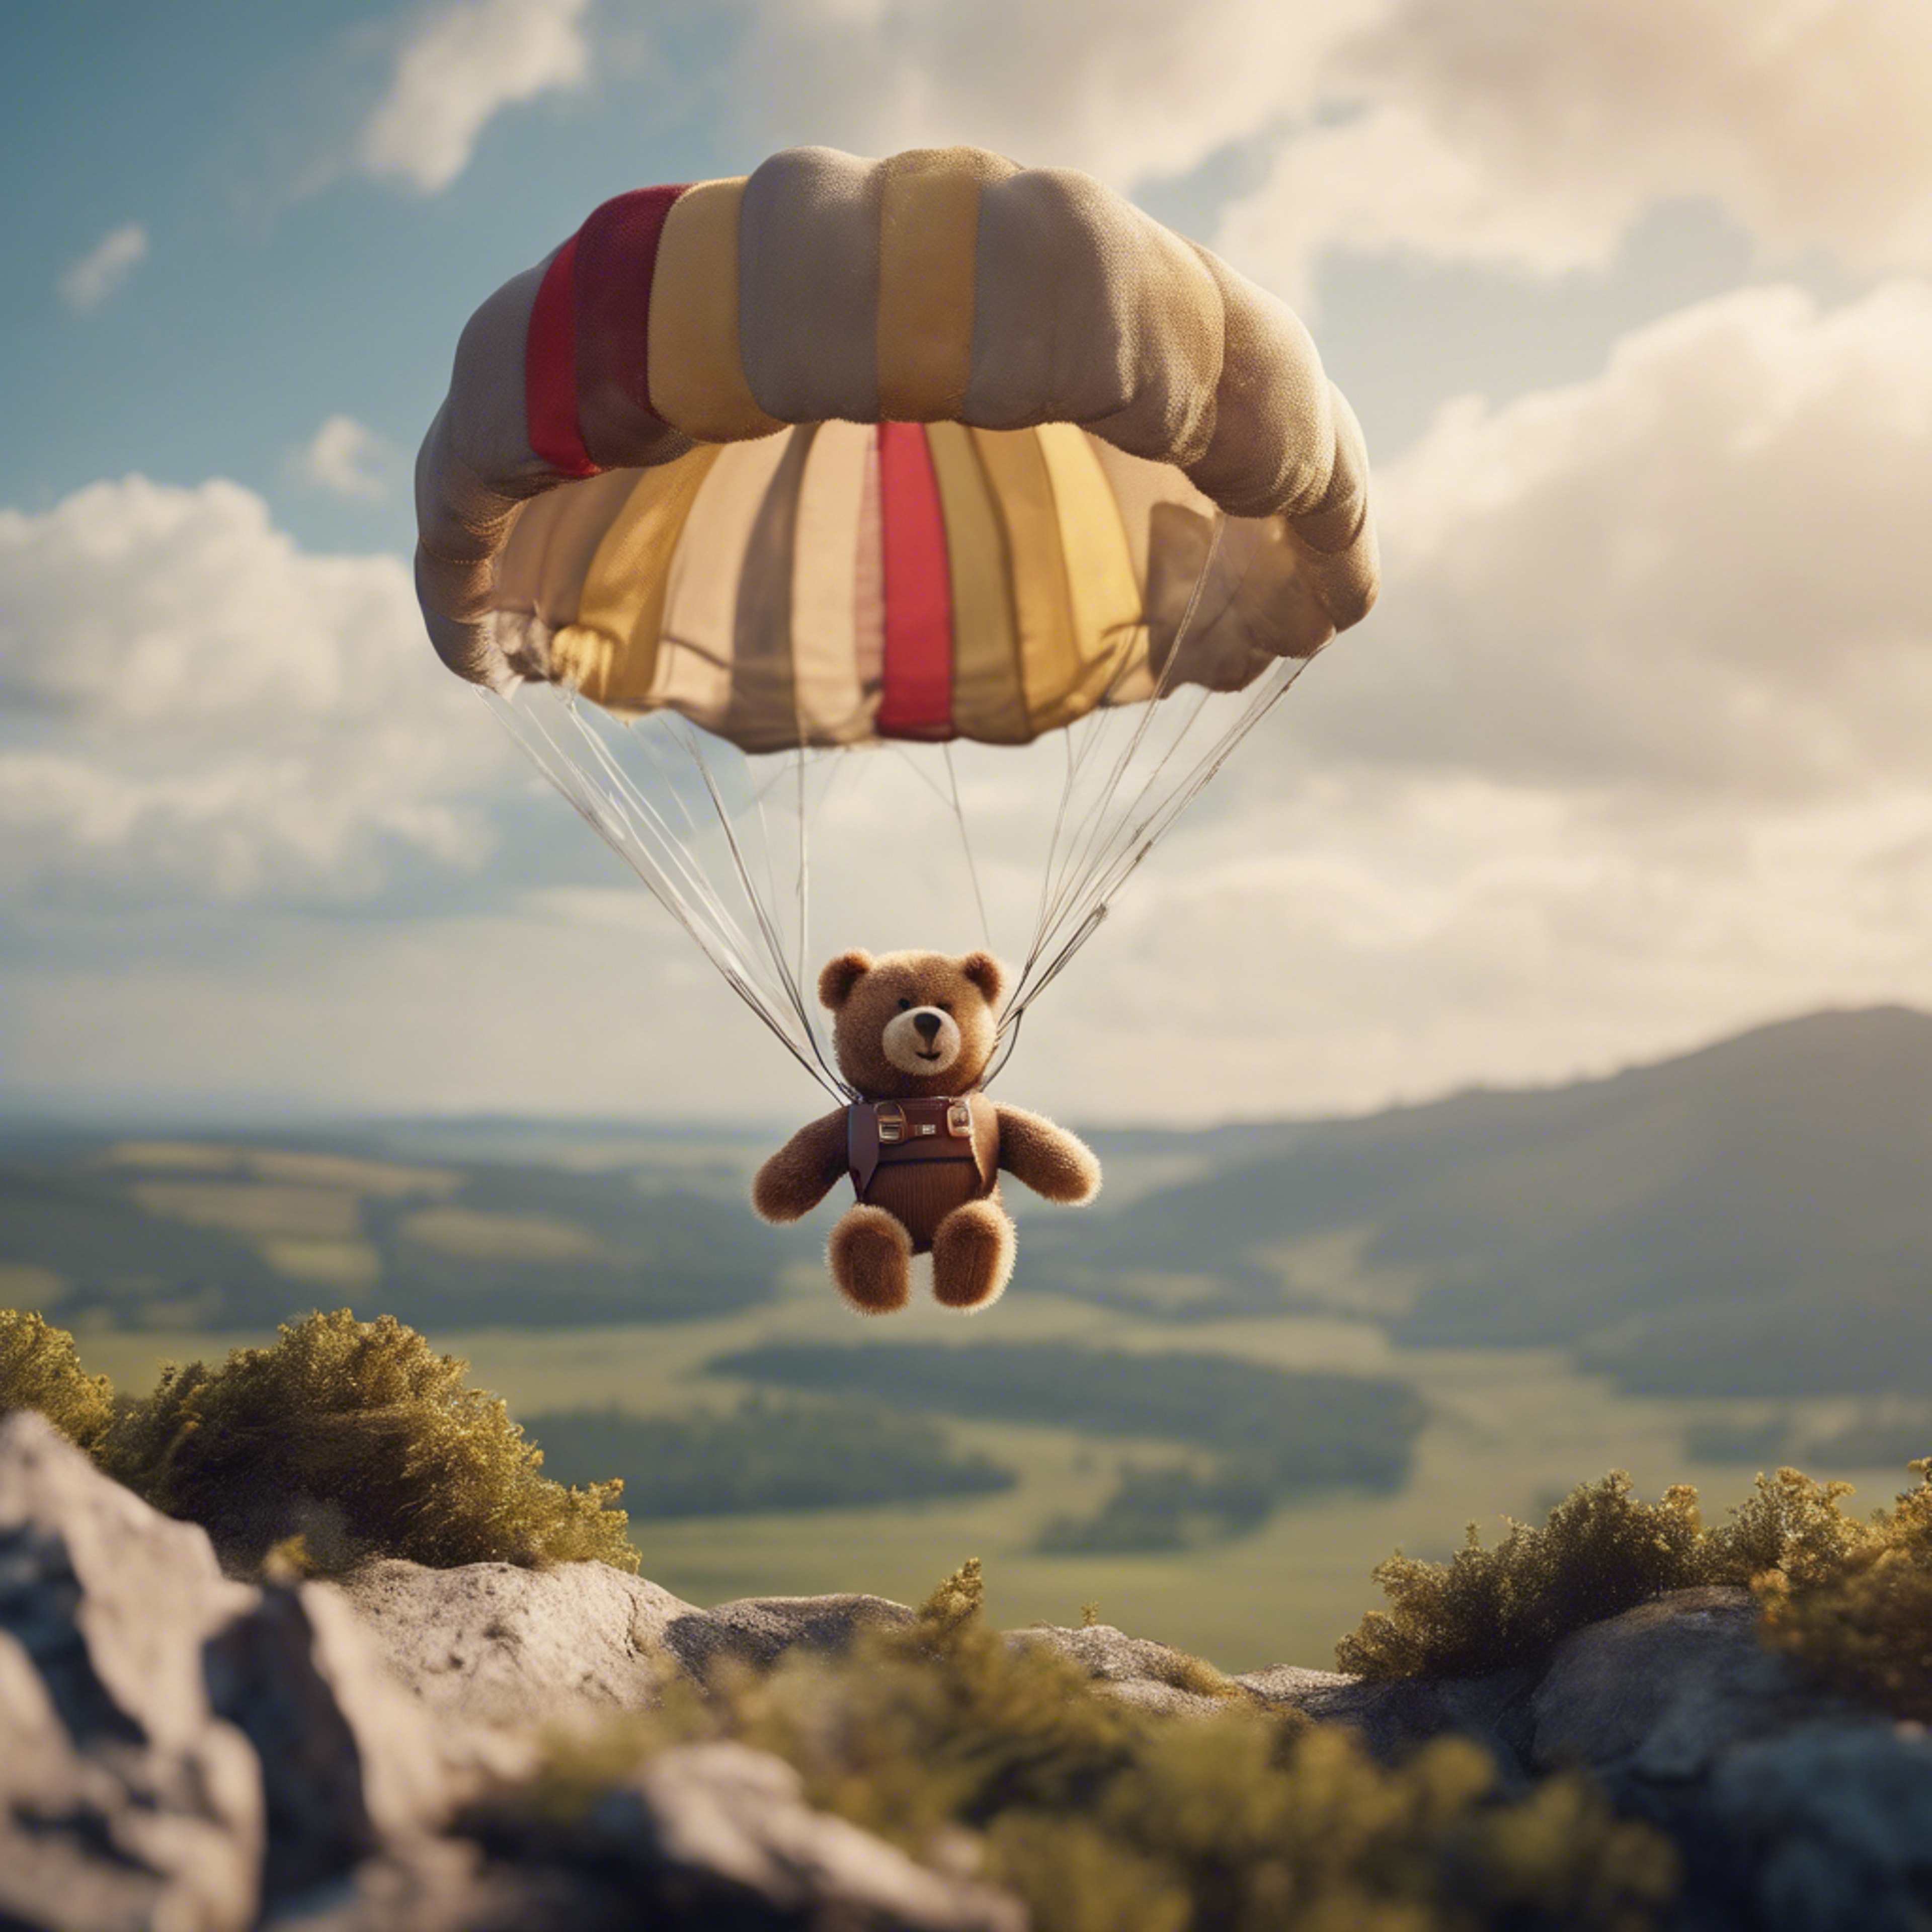 A teddy bear parachuting from a high toy airplane, with a thrilling landscape beneath.壁紙[36a96922edbd44d1907c]